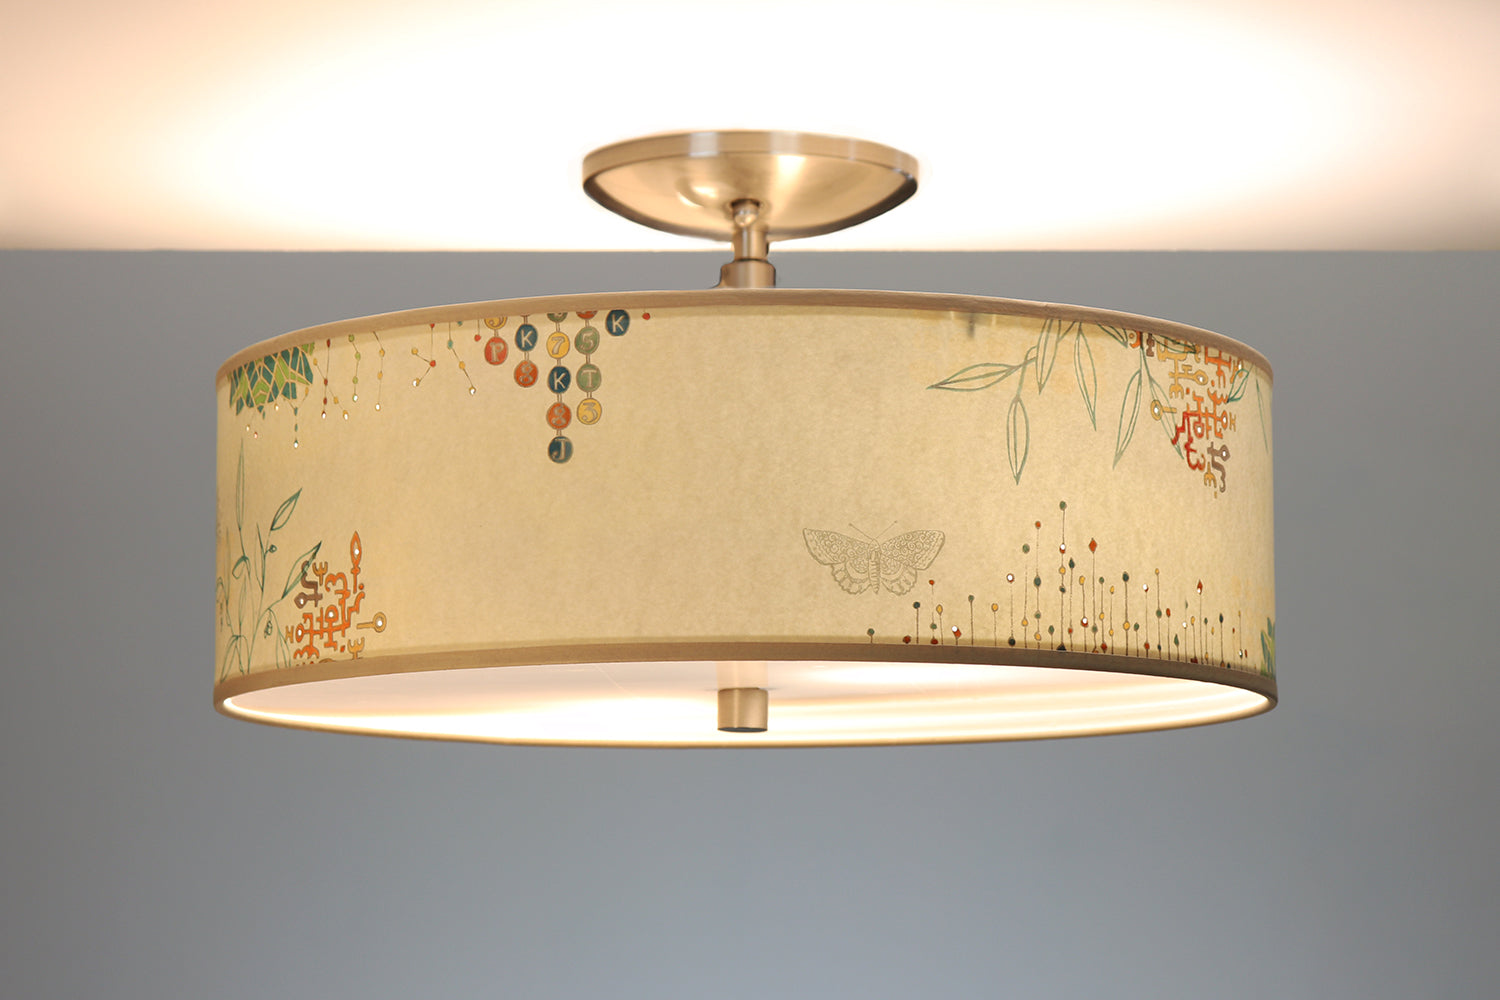 Janna Ugone & Co Ceiling Fixture 16" / Raw Brass Ceiling Lamp in Ecru Journey